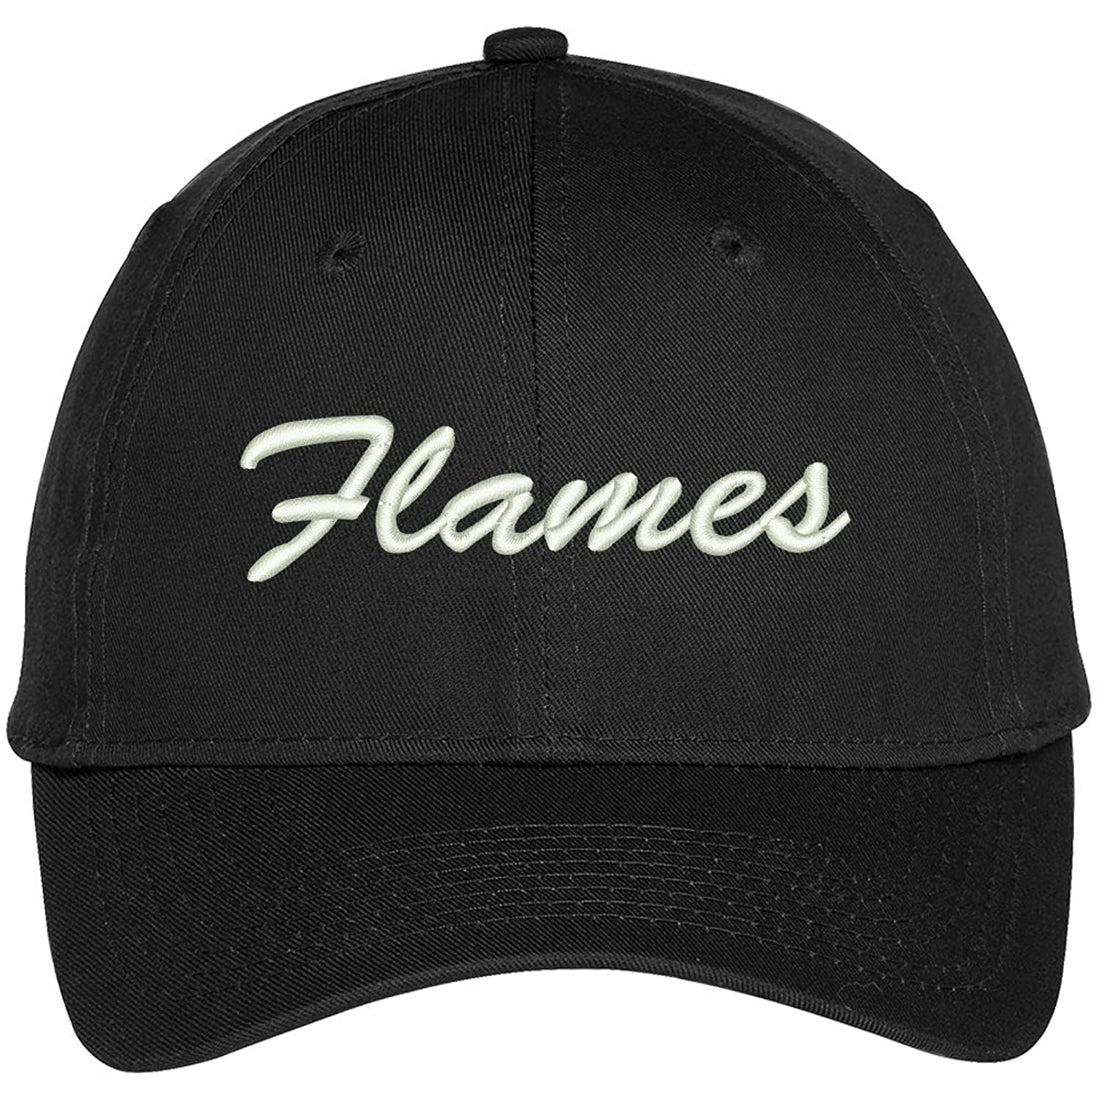 Trendy Apparel Shop Flames Embroidered Precurved Adjustable Cap